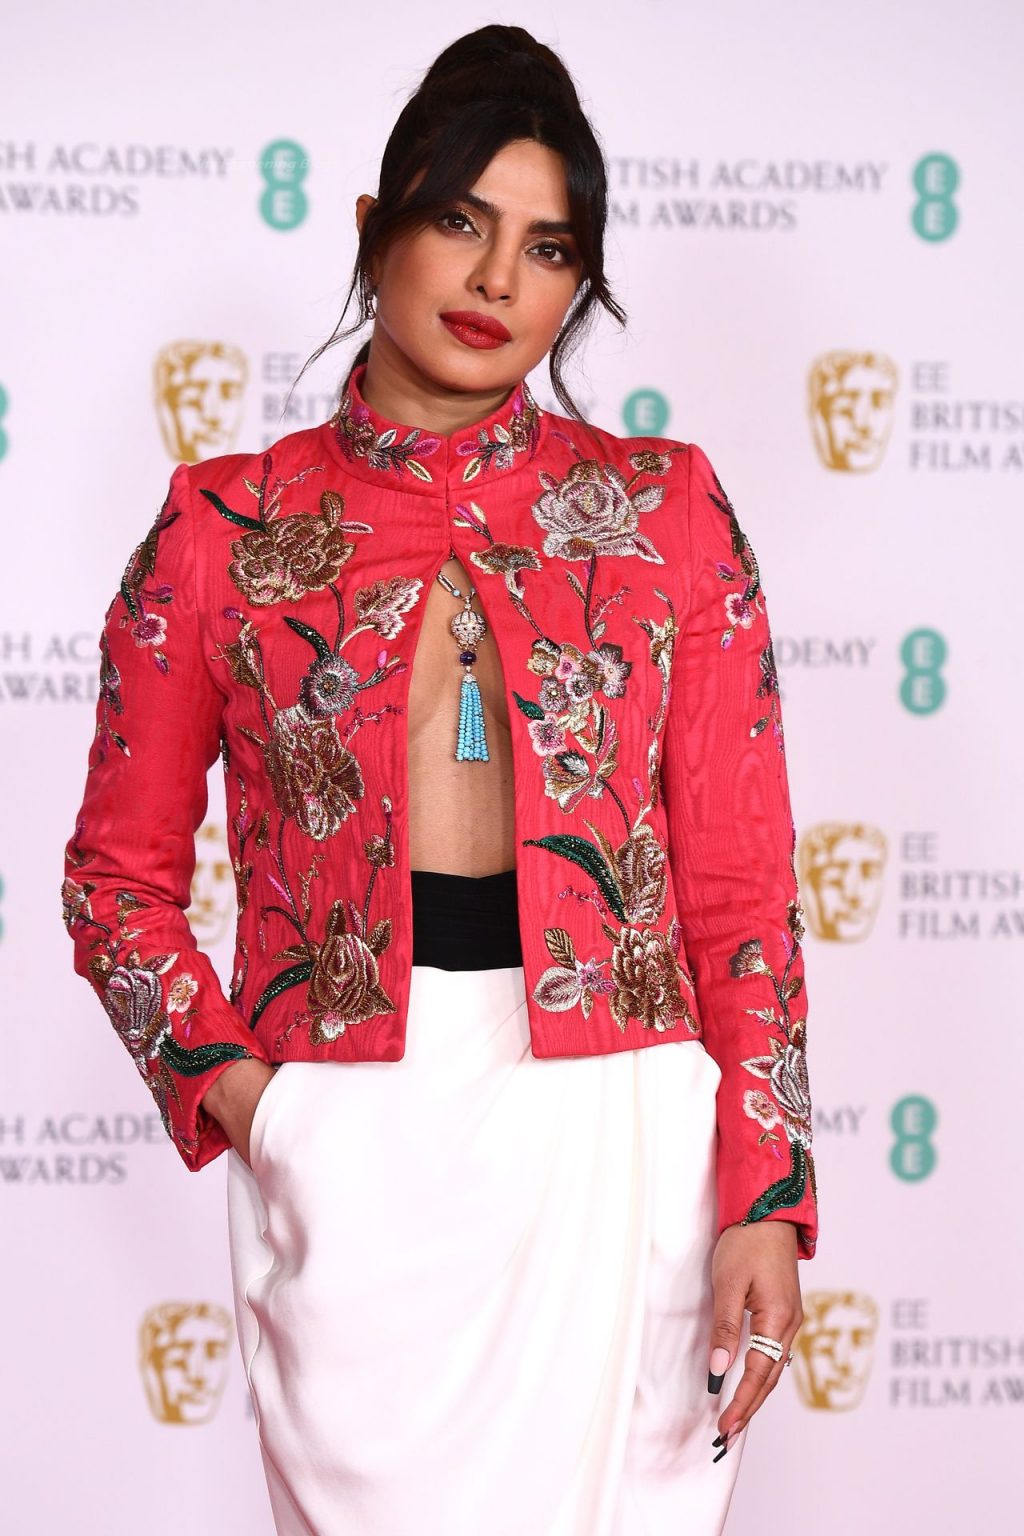 Braless Priyanka Chopra Stuns on the Red Carpet of the EE British Academy Film Awards (35 Photos)